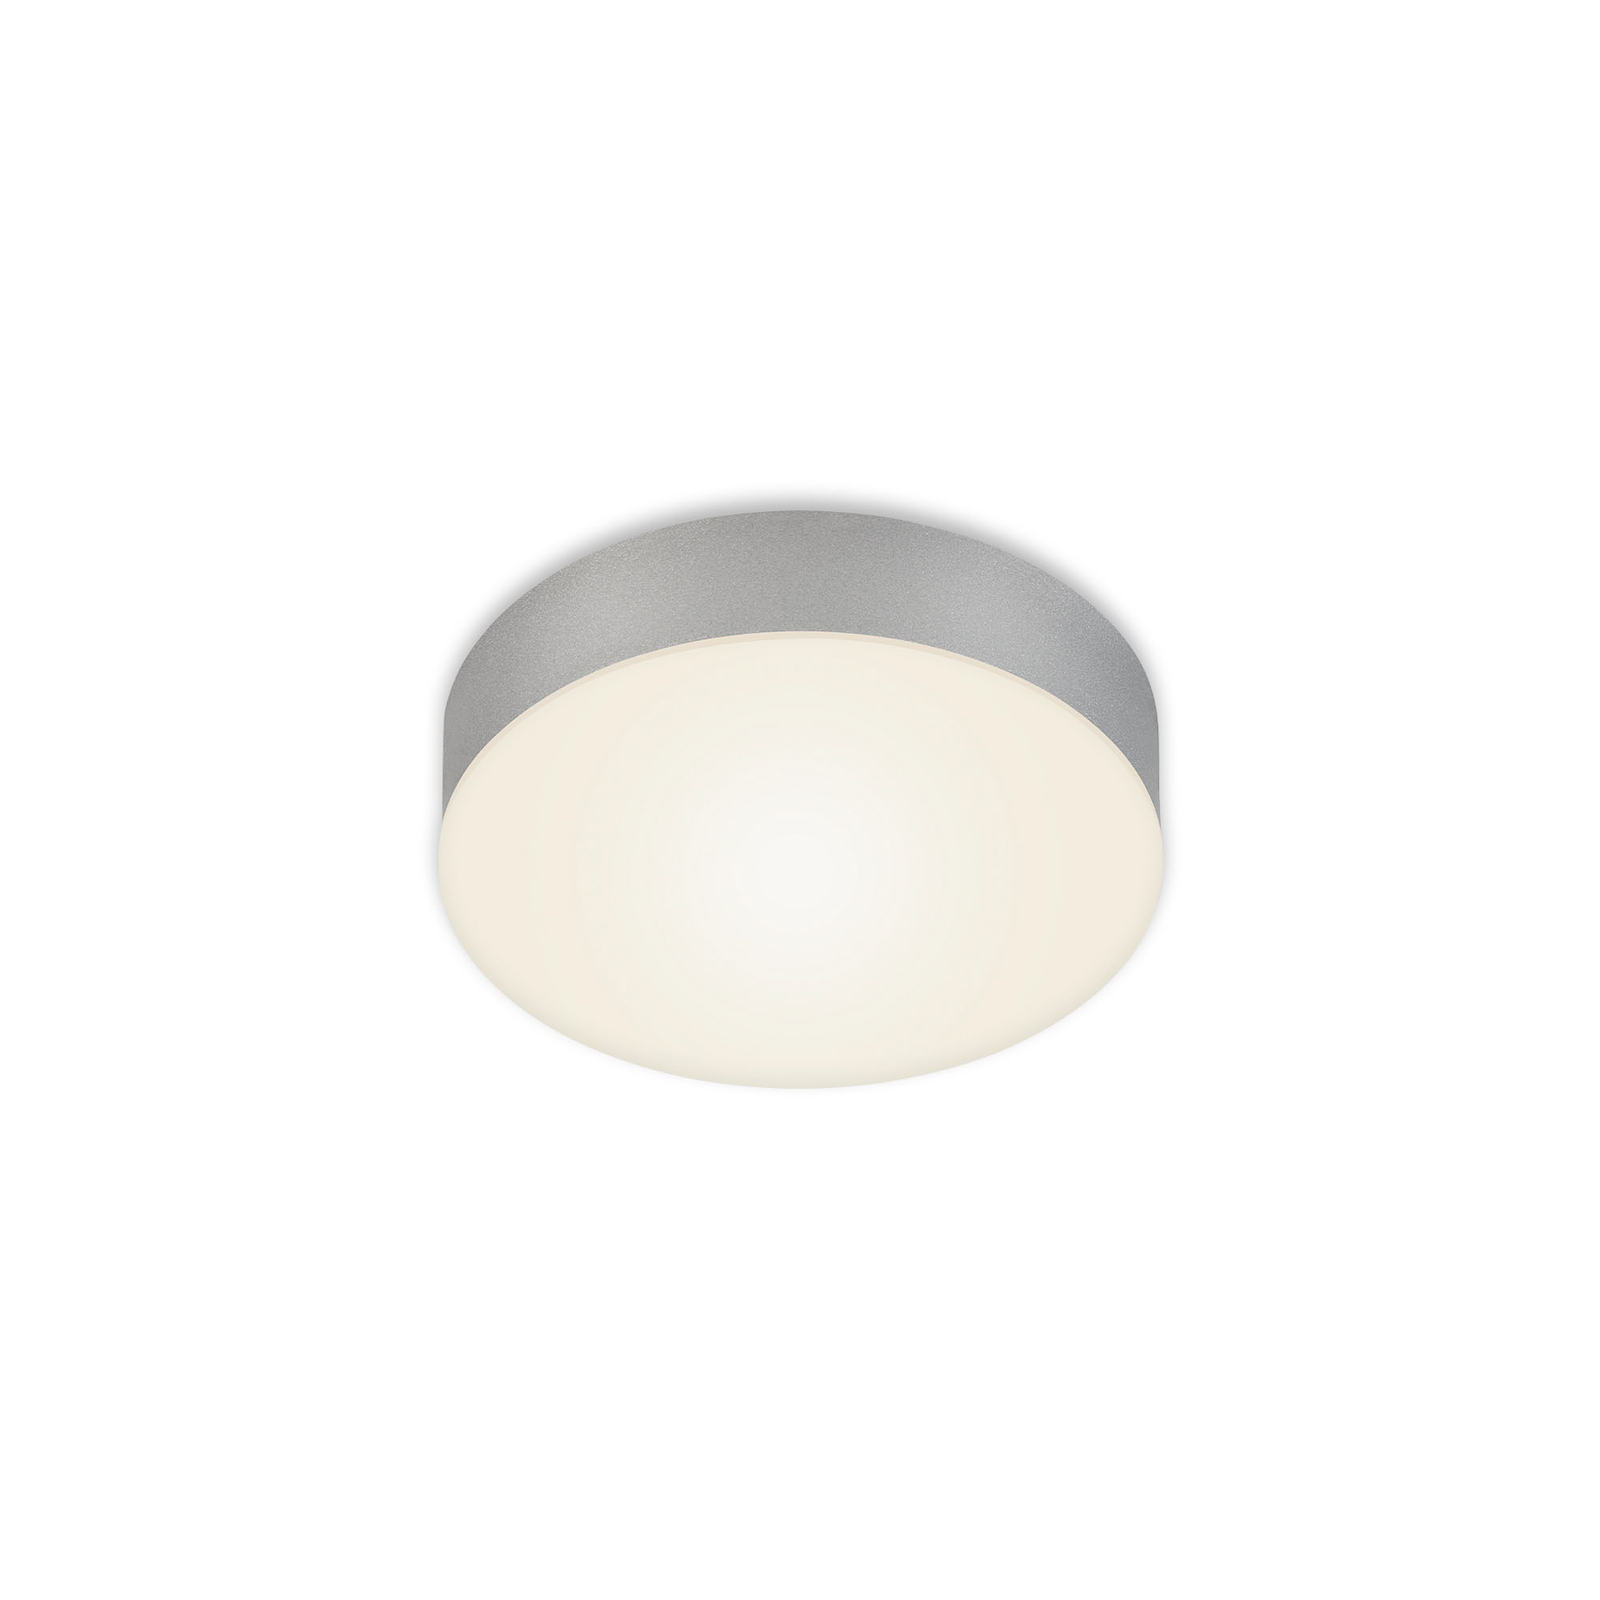 Lampa sufitowa LED Flame, Ø 15,7 cm, srebrna